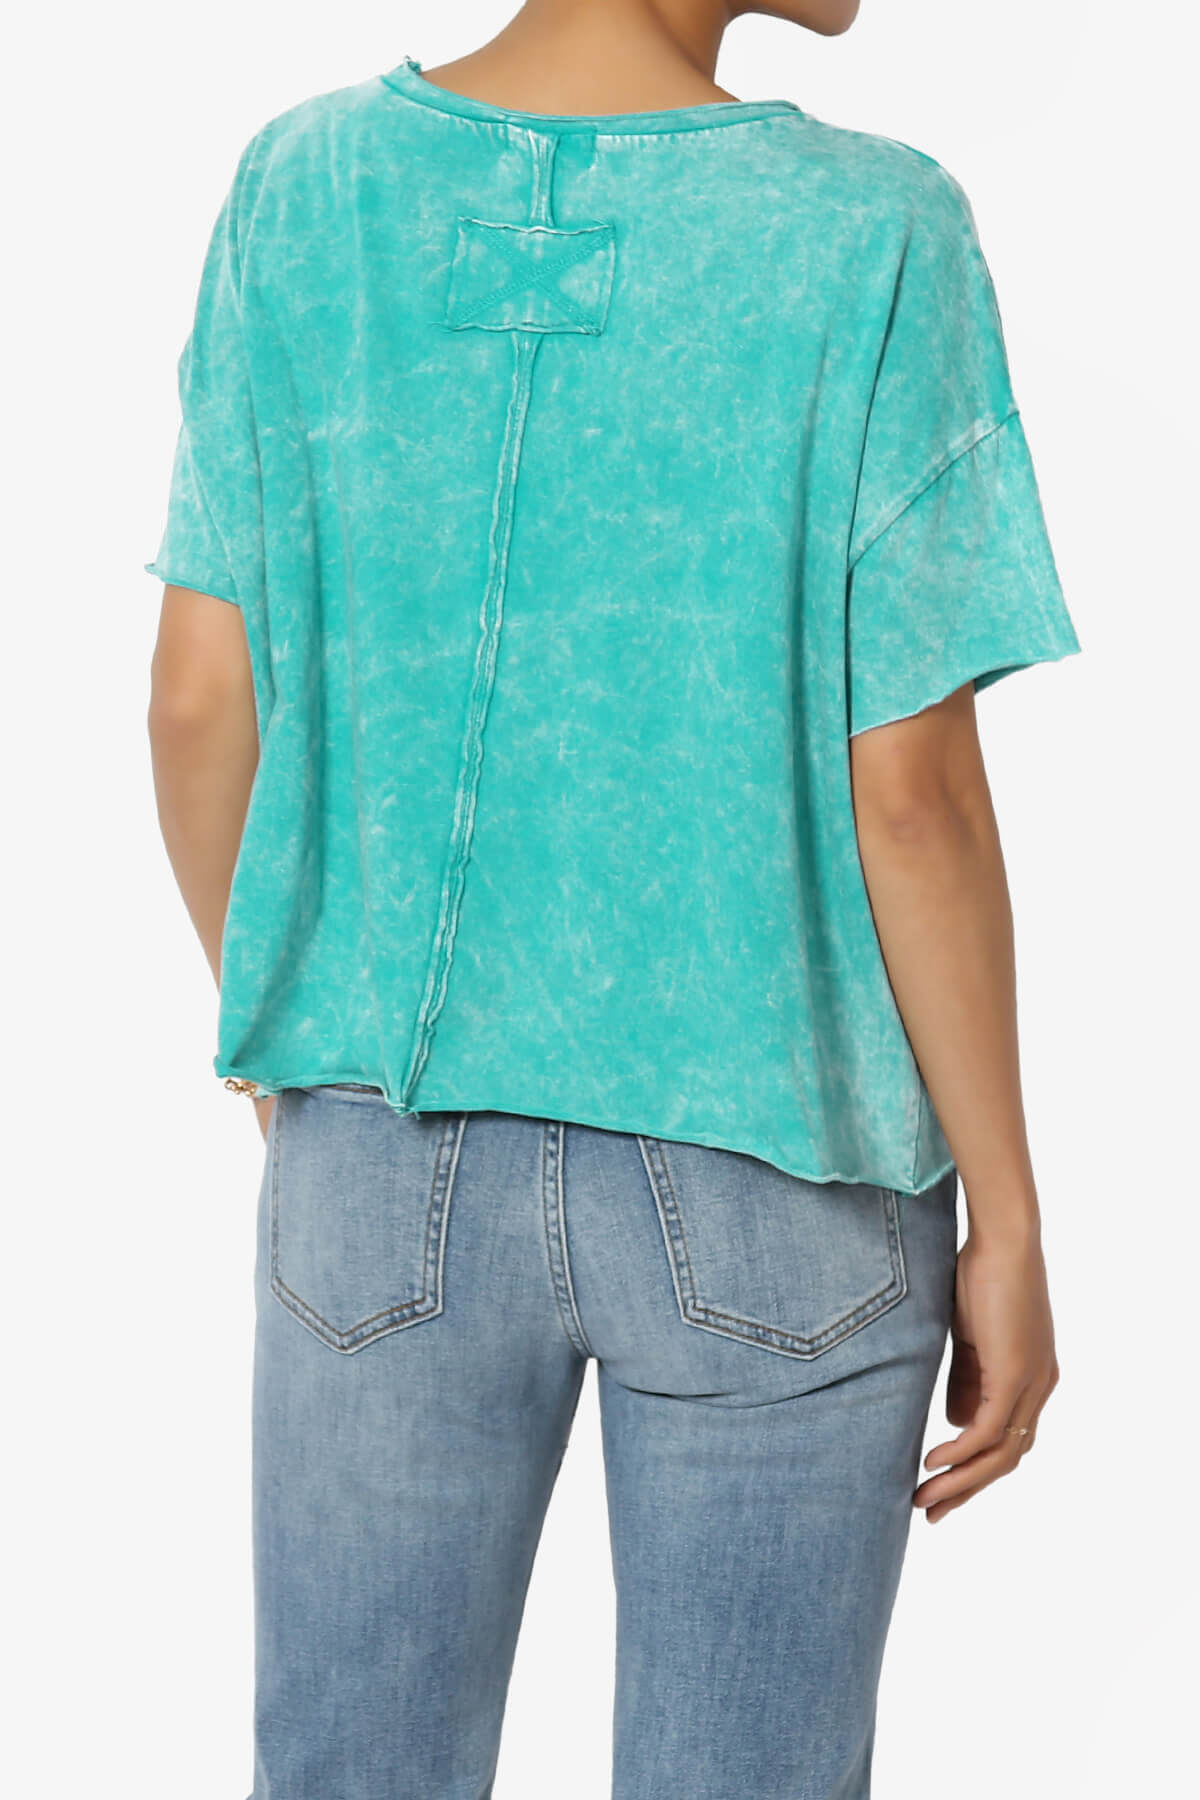 Kiralin Acid Wash Short Sleeve Crop T-Shirt LT TEAL_2